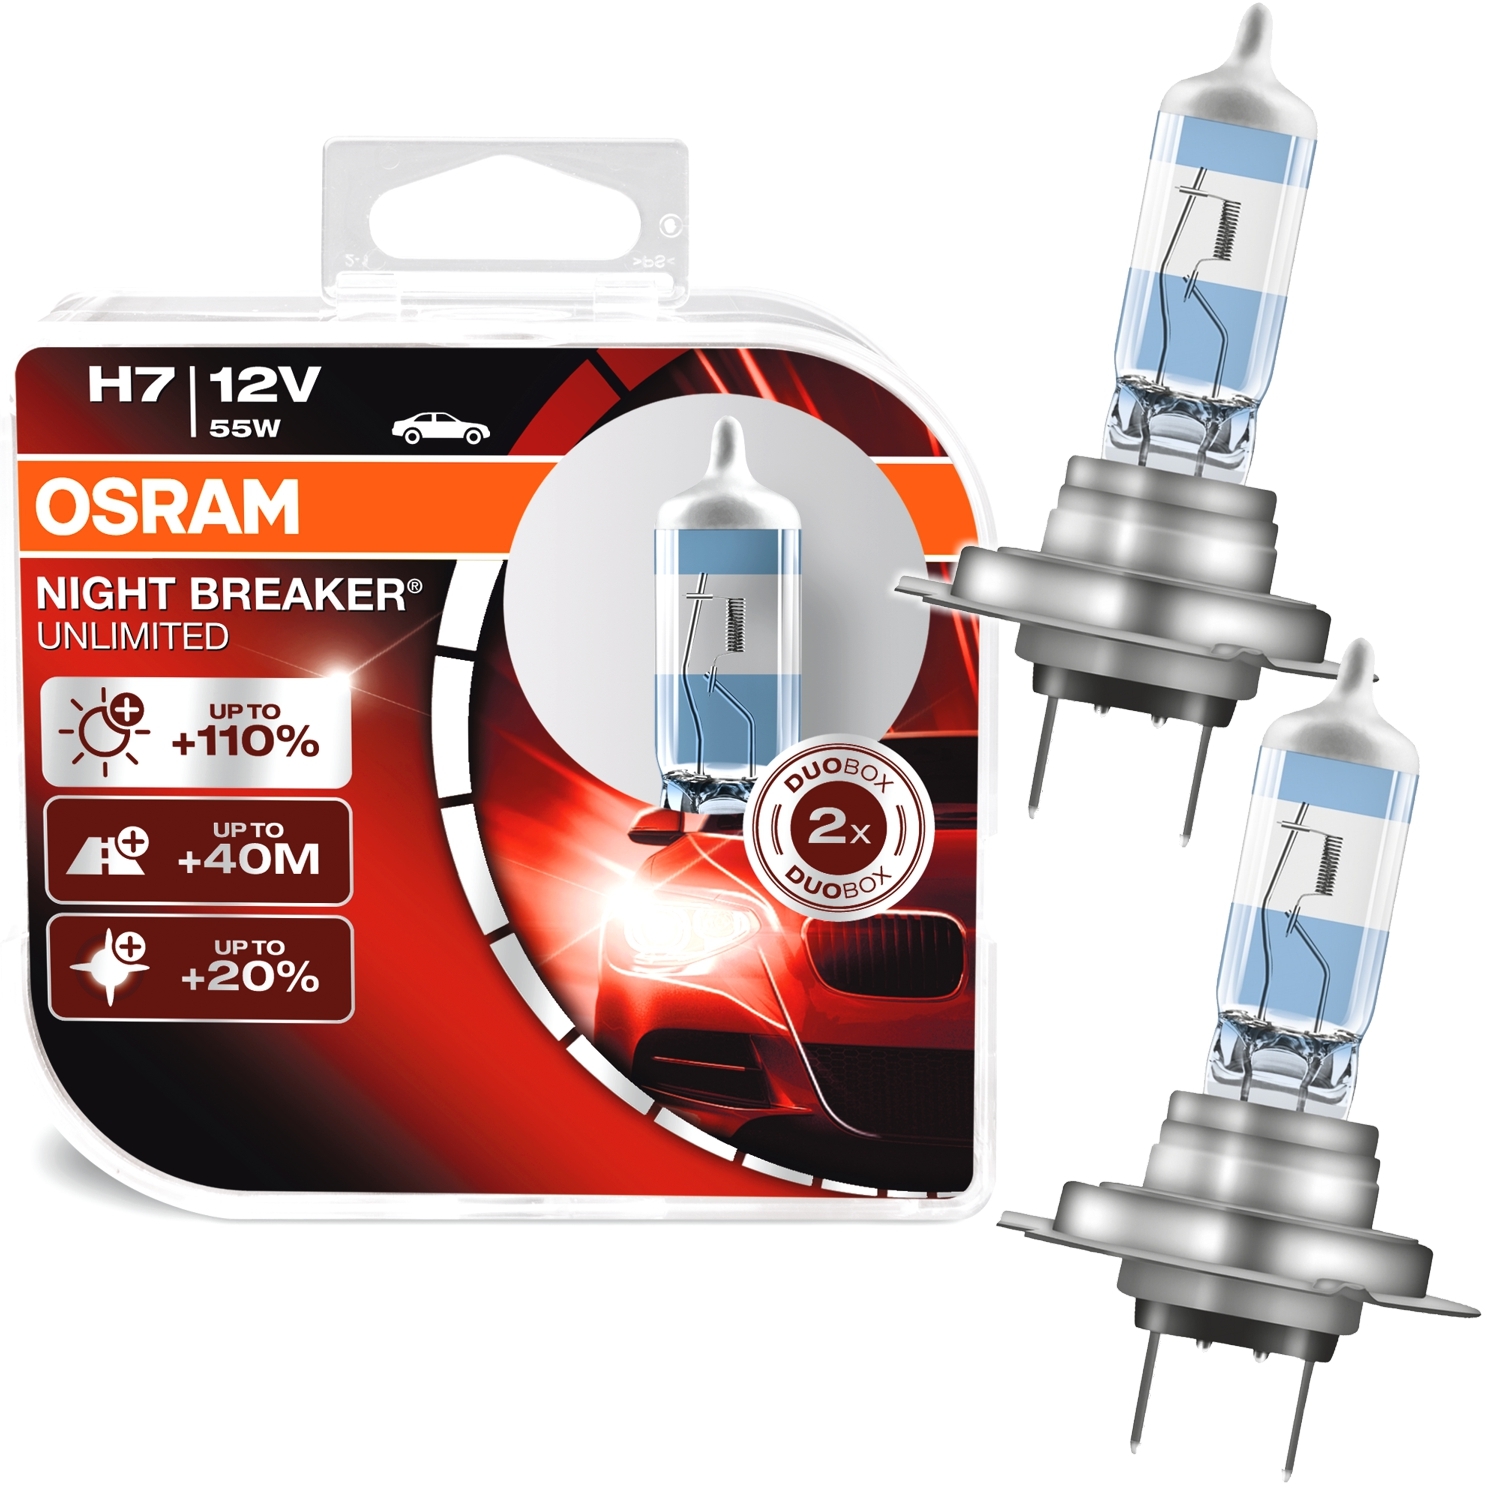 OSRAM Nightbreaker Unlimited H7 12V 55W